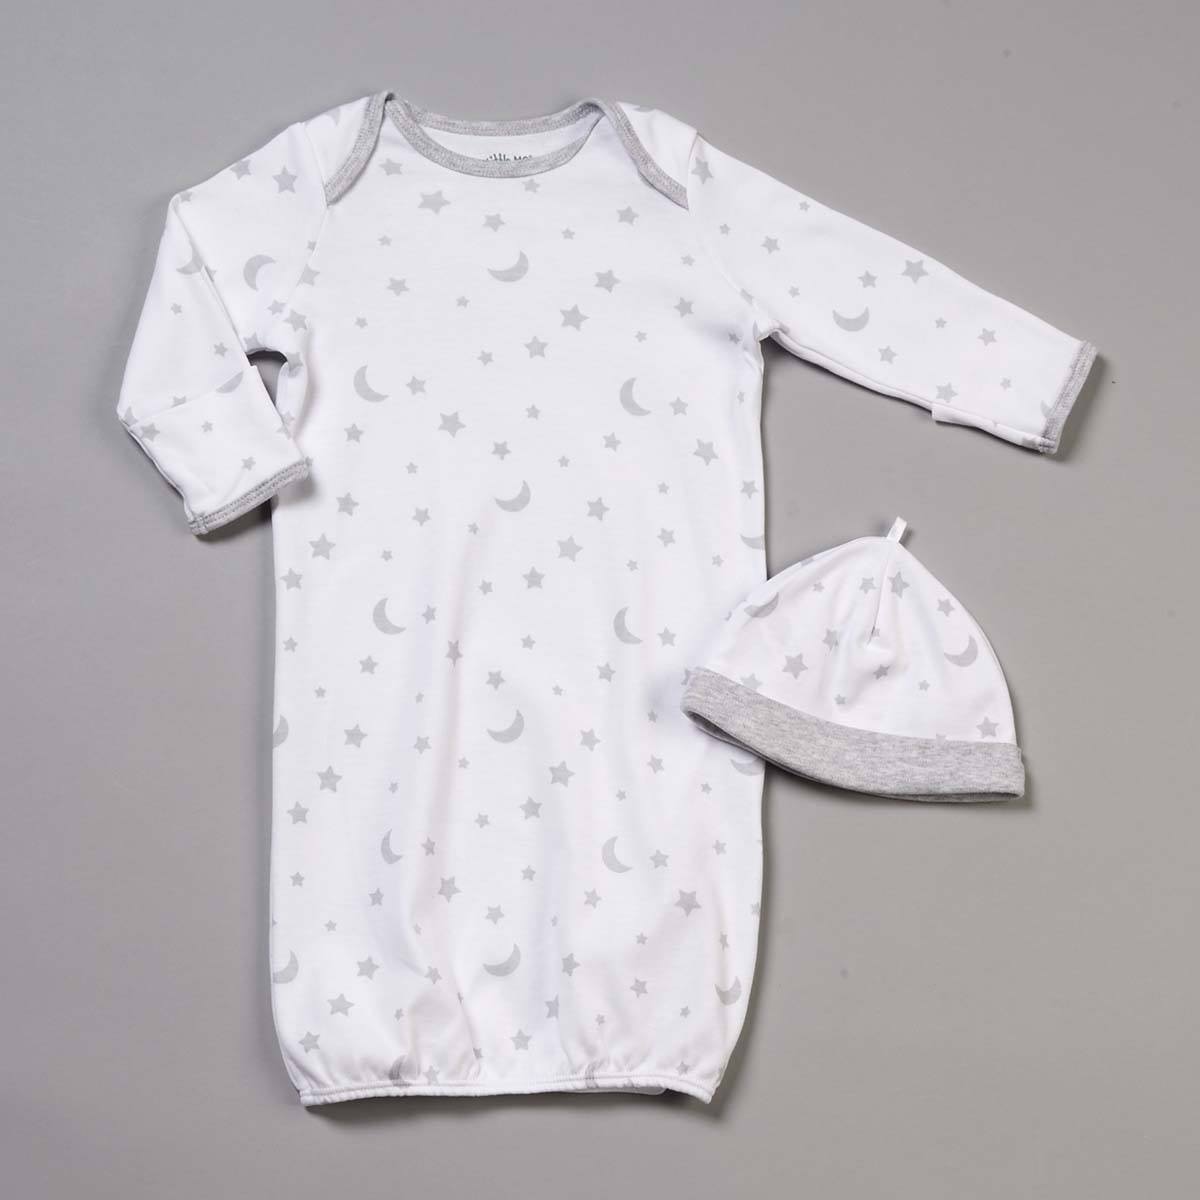 Baby Unisex (NB-3M) Little Me Moon Star Gown & Hat Set